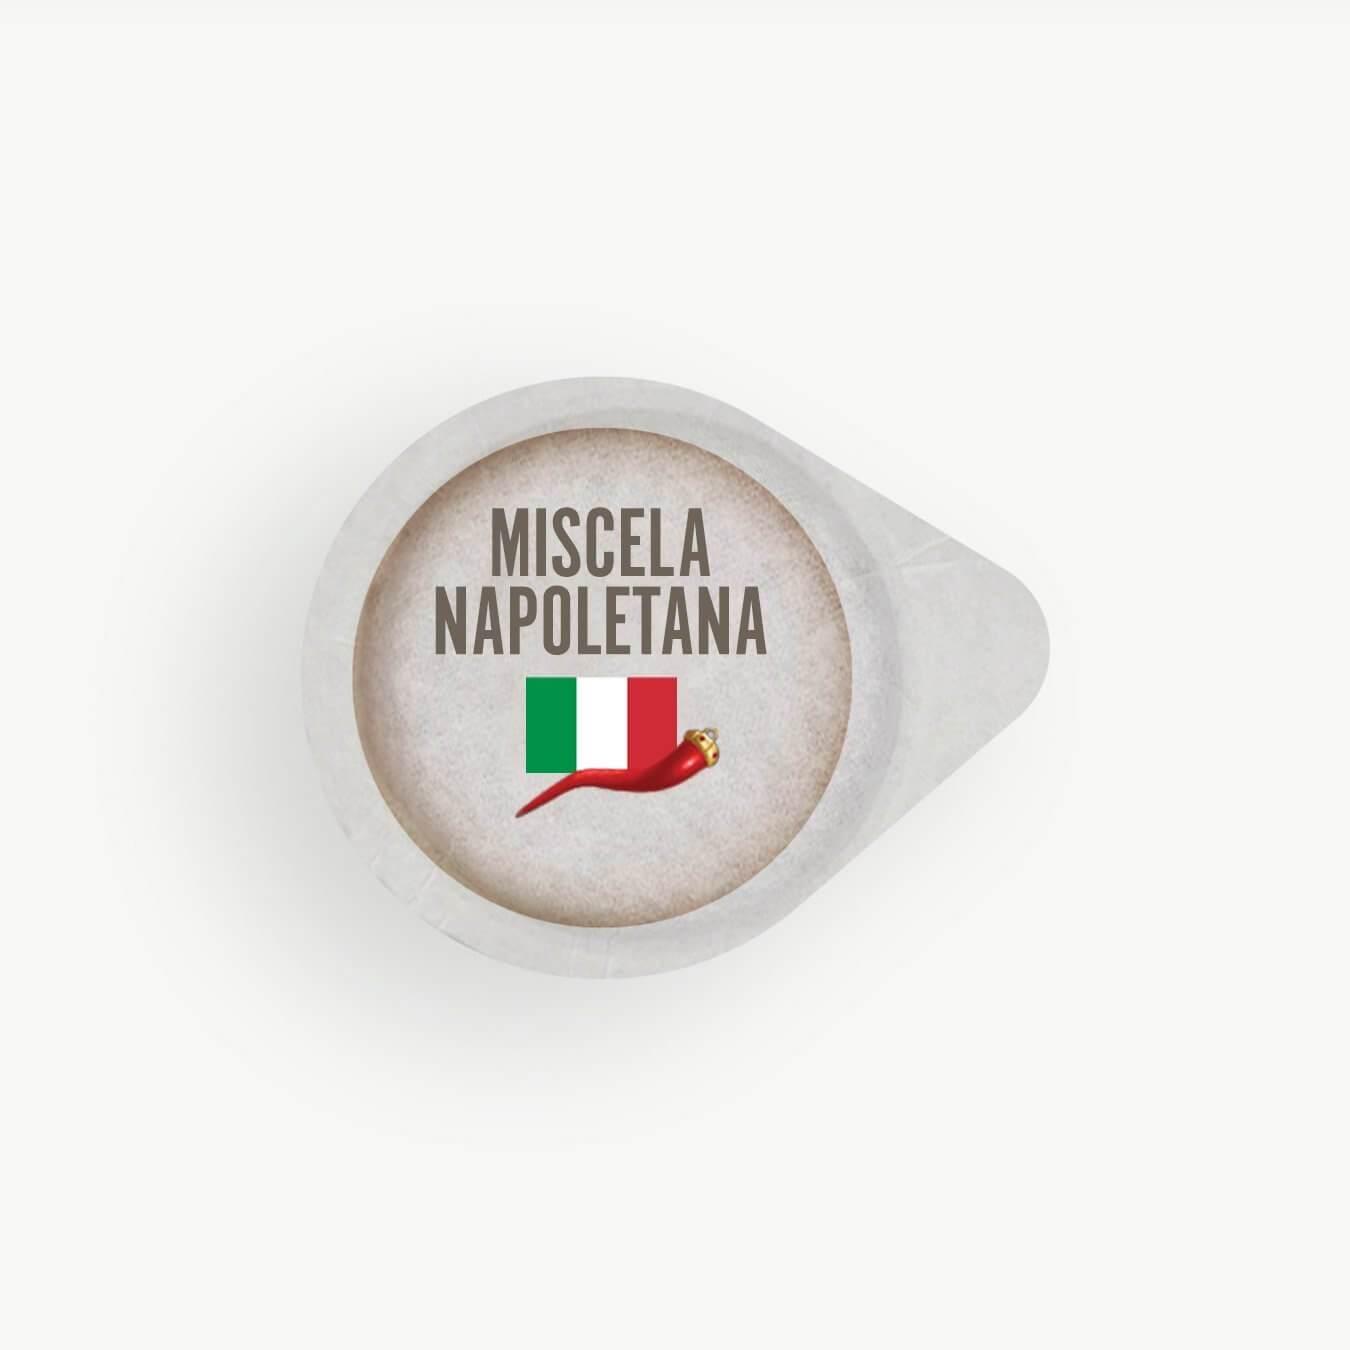 caffè in cialde ese44 miscela napoletana 800 special coffee - 50 cialde